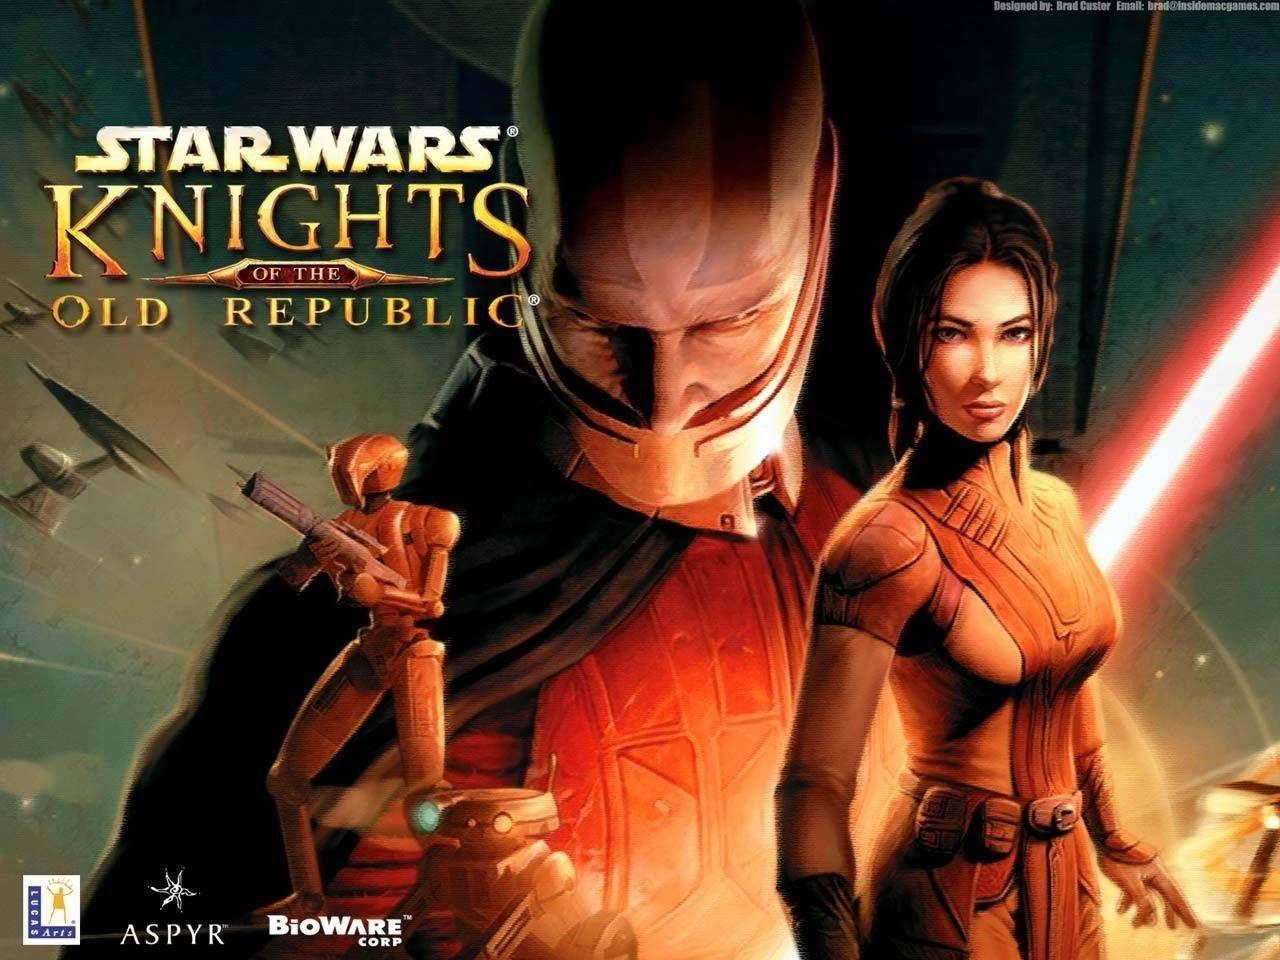  Star Wars: Knights of the Old Republic وهي من أفضل ألعاب الكمبيوتر